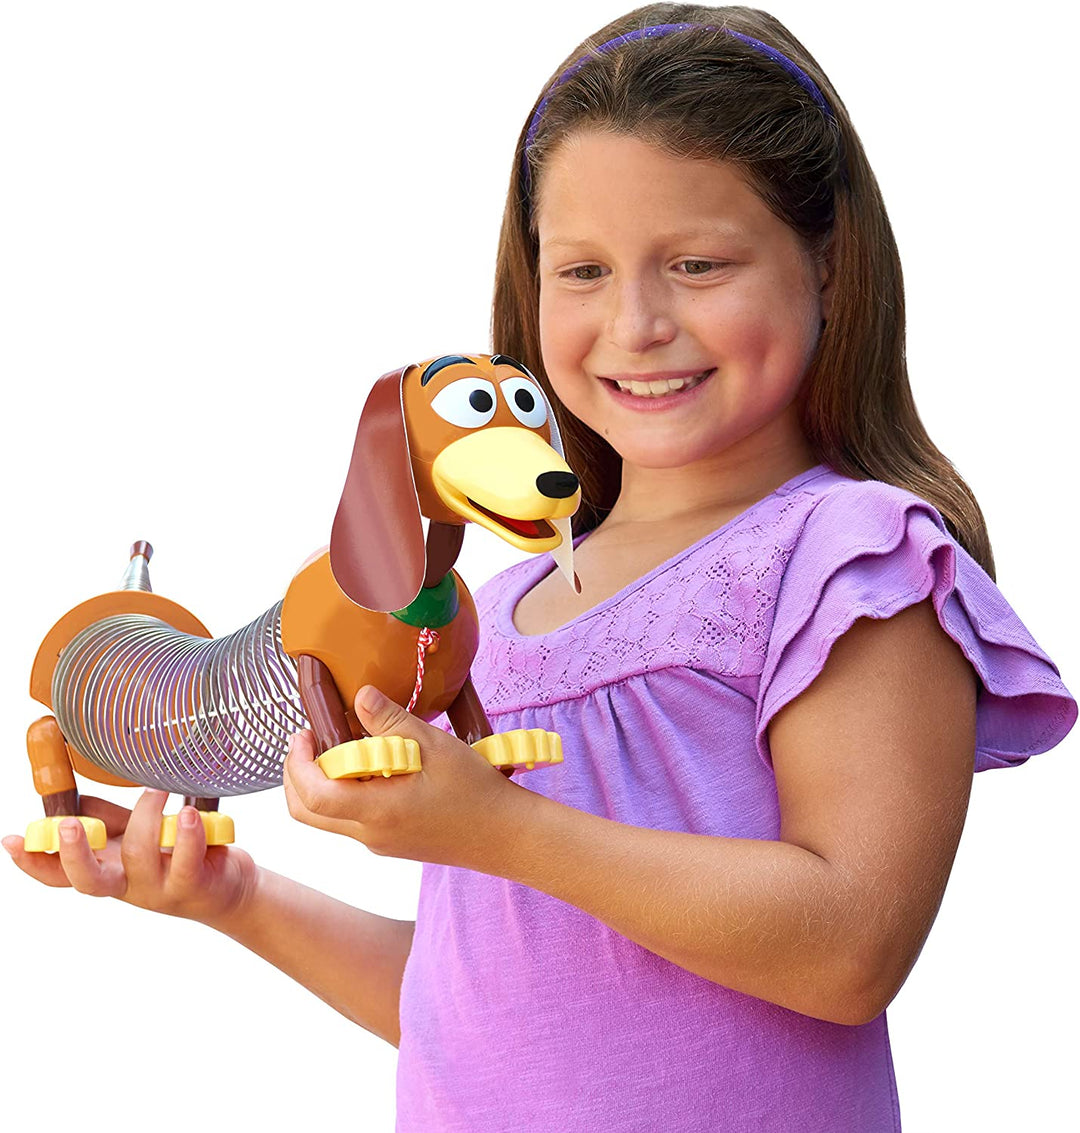 Disney Pixar Toy Story Slinky Dog Toy